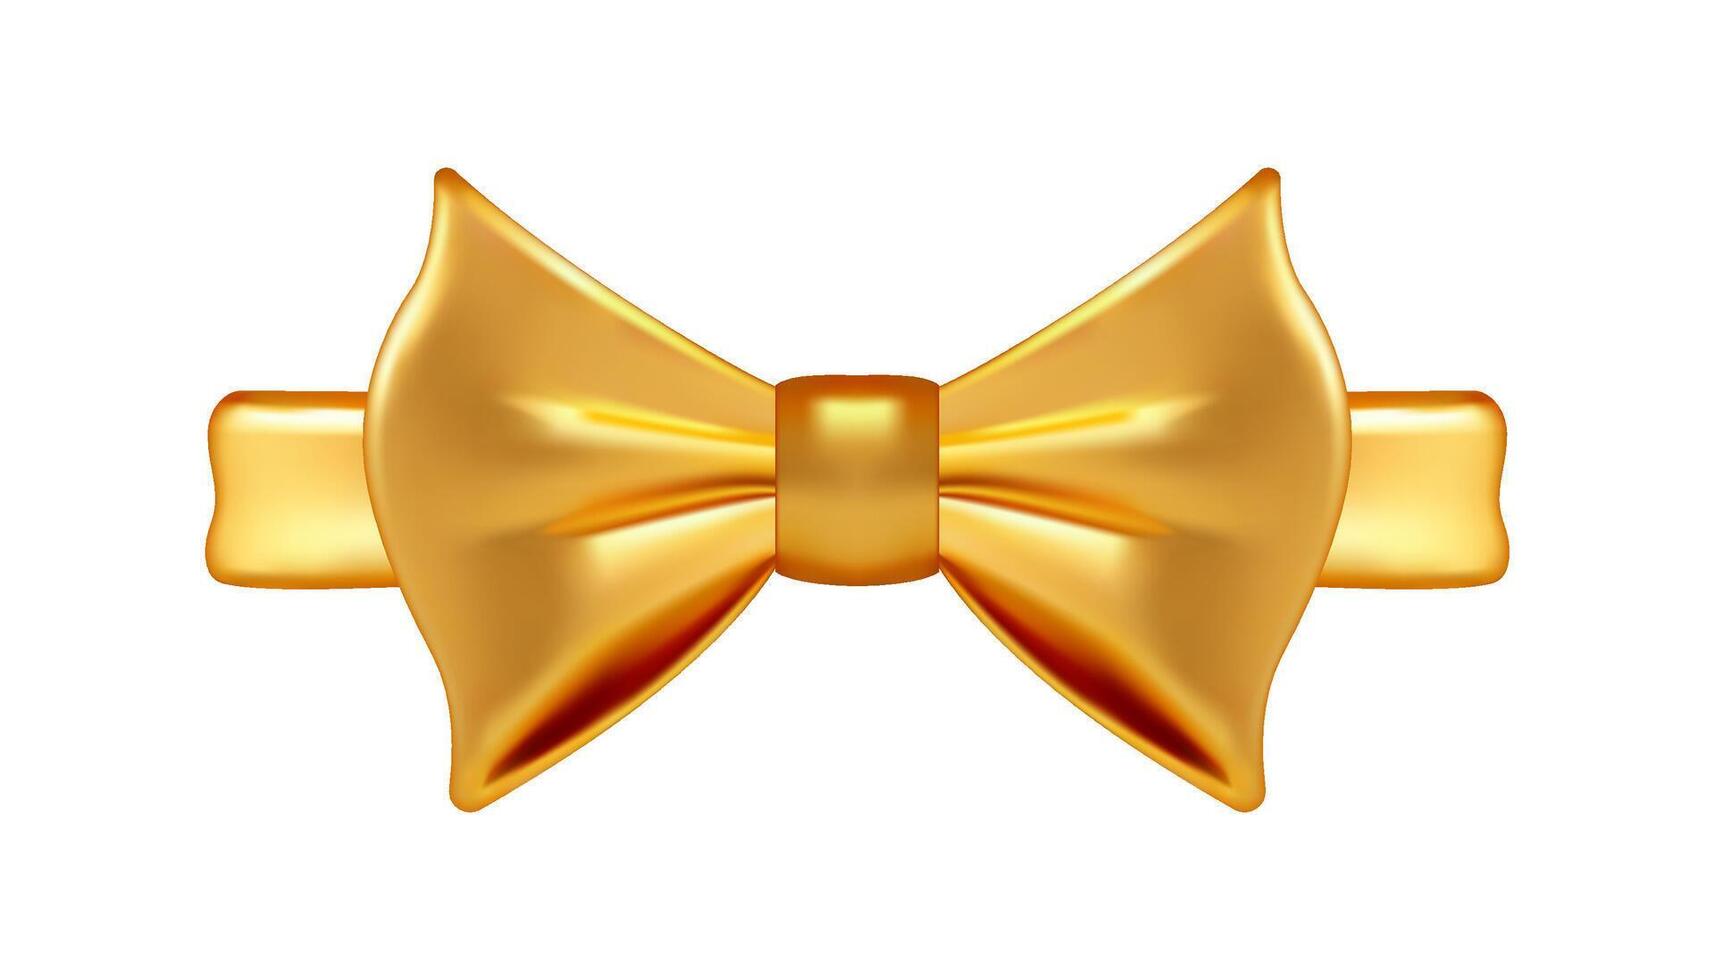 dourado metálico amarrado arco grampo elegante luxo fêmea acessório 3d ícone realista vetor